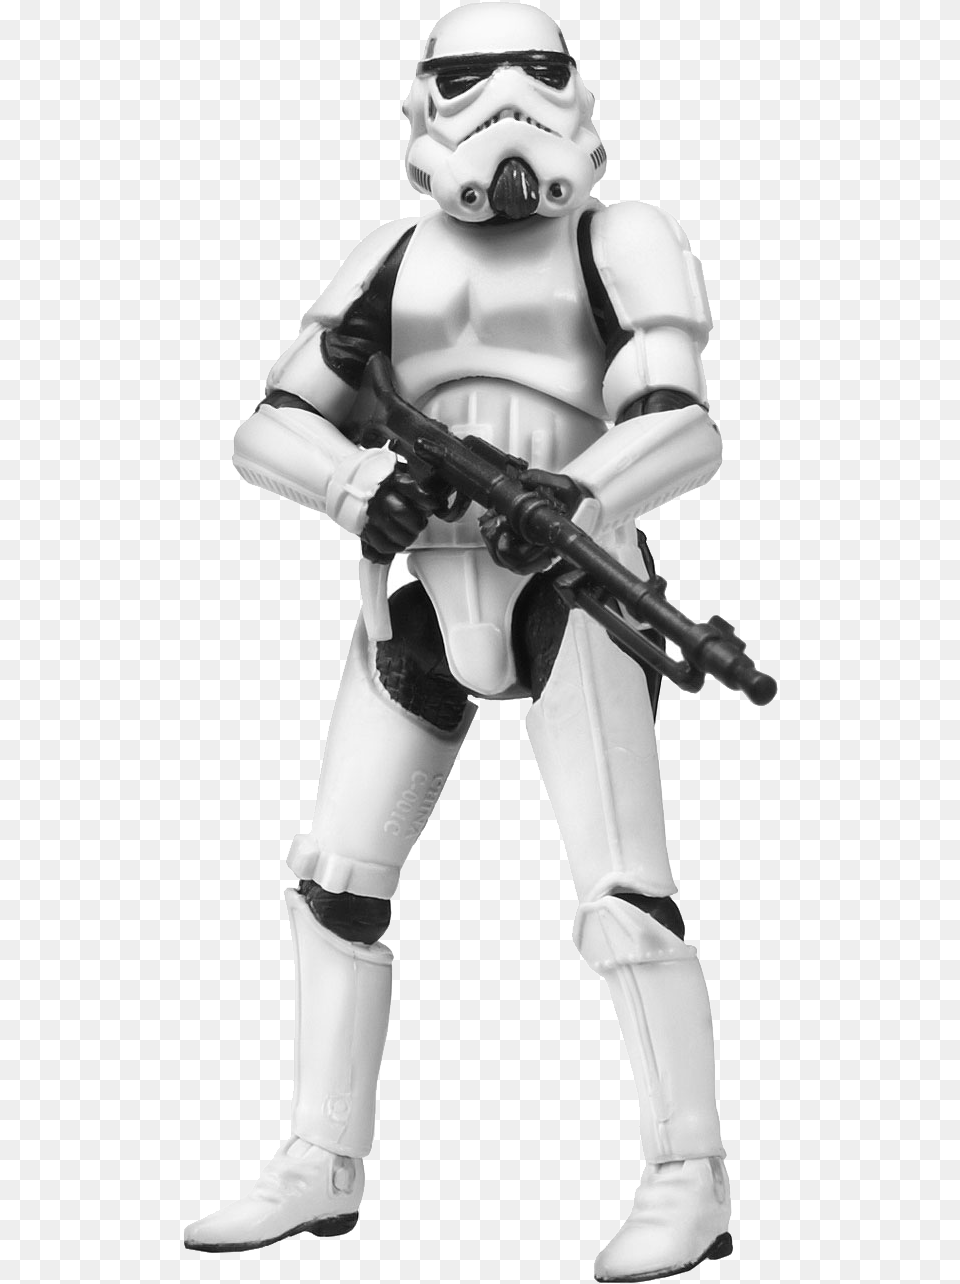 Stormtrooper Star Wars Stormtrooper, Person, Face, Head, Gun Png Image